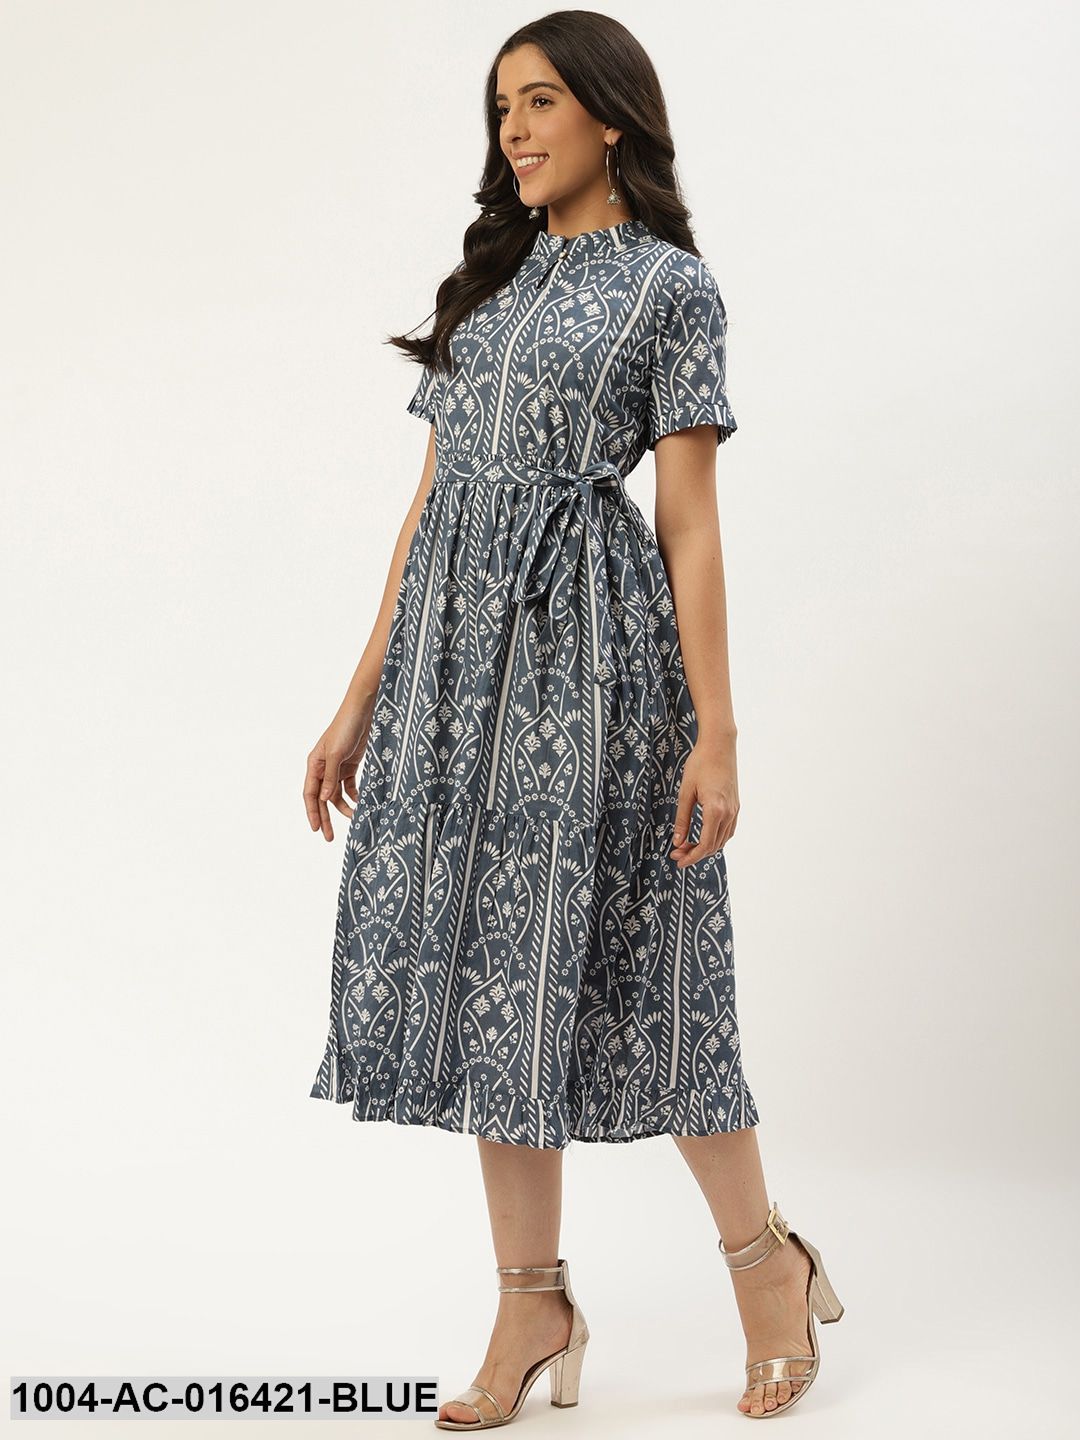 Blue Ethnic Motifs Printed High-neck Cotton A-Line Dress